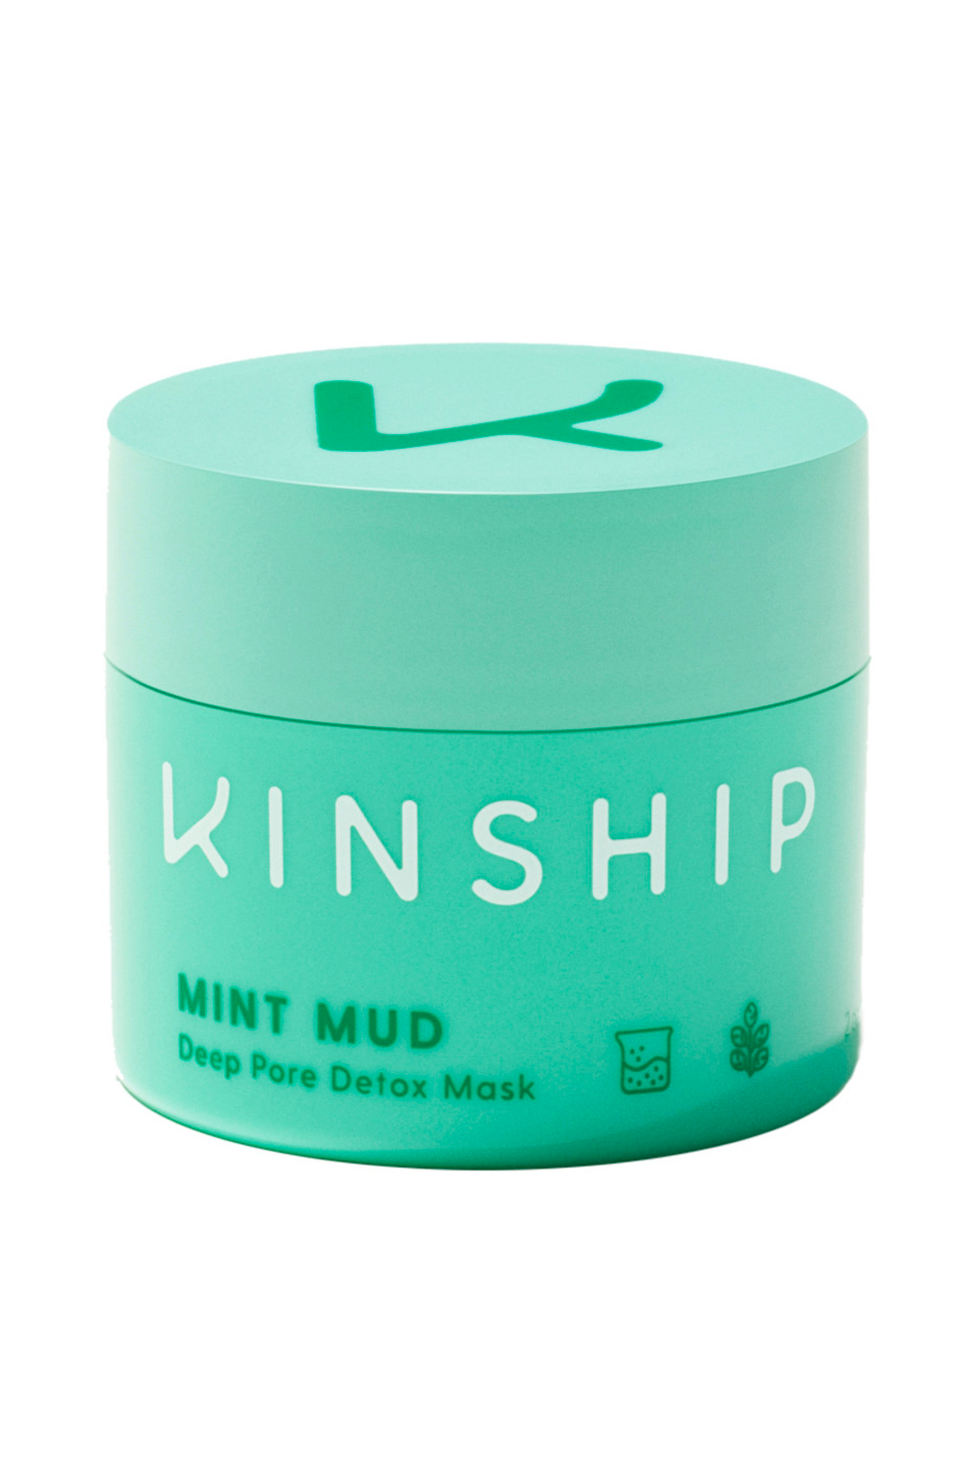 Kinship Mint Mud Deep Pore Detox Mask